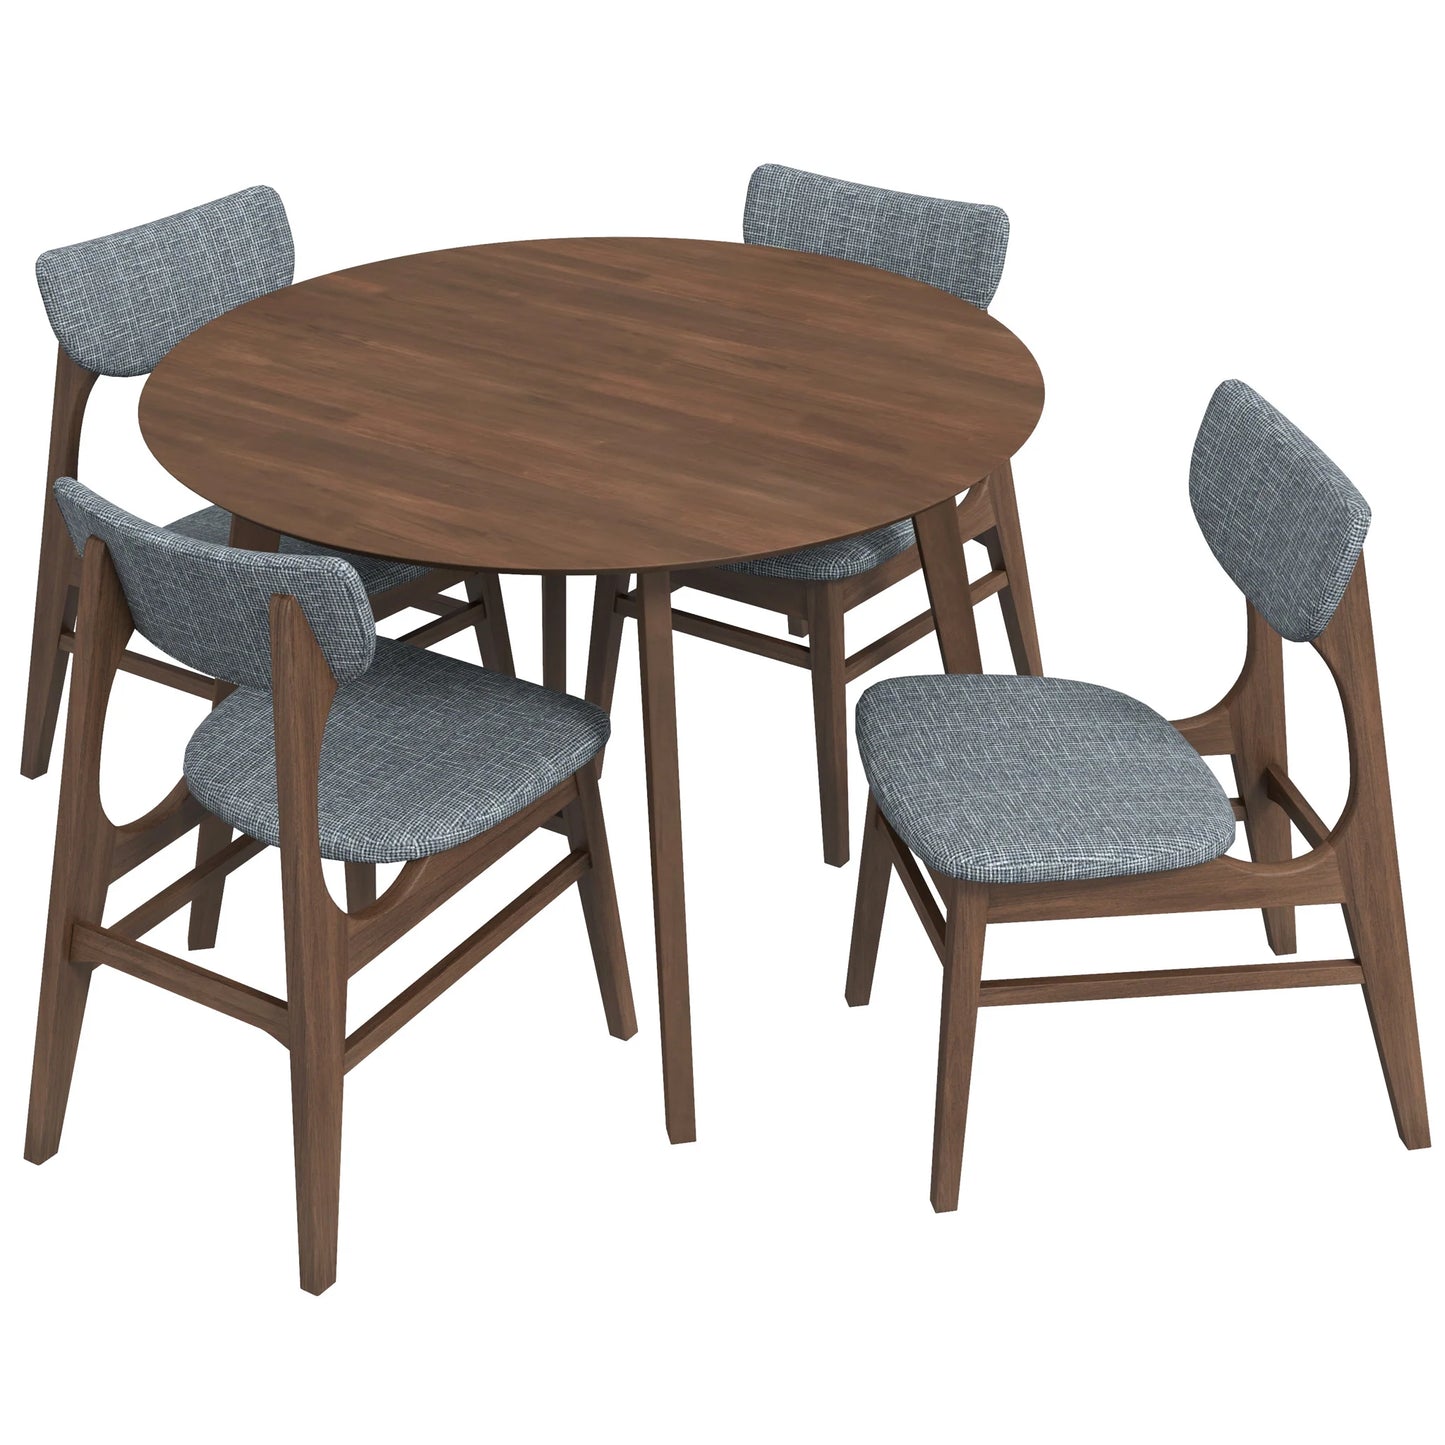 Aliana Dining set with 4 Collins Gray Chairs (Walnut)